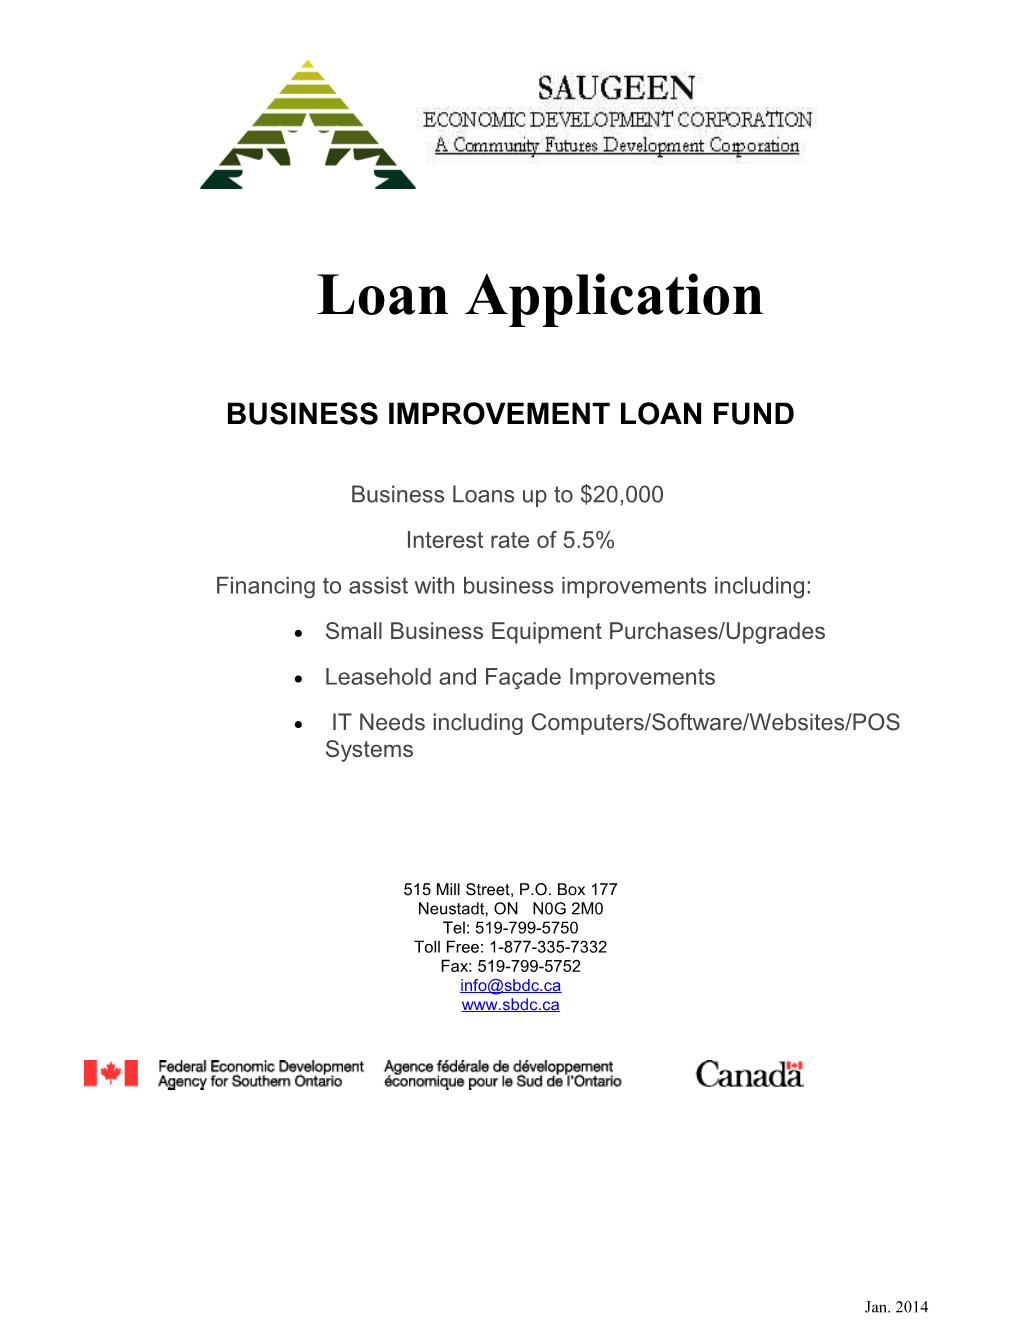 BUSINESS Improvement Loan Fund